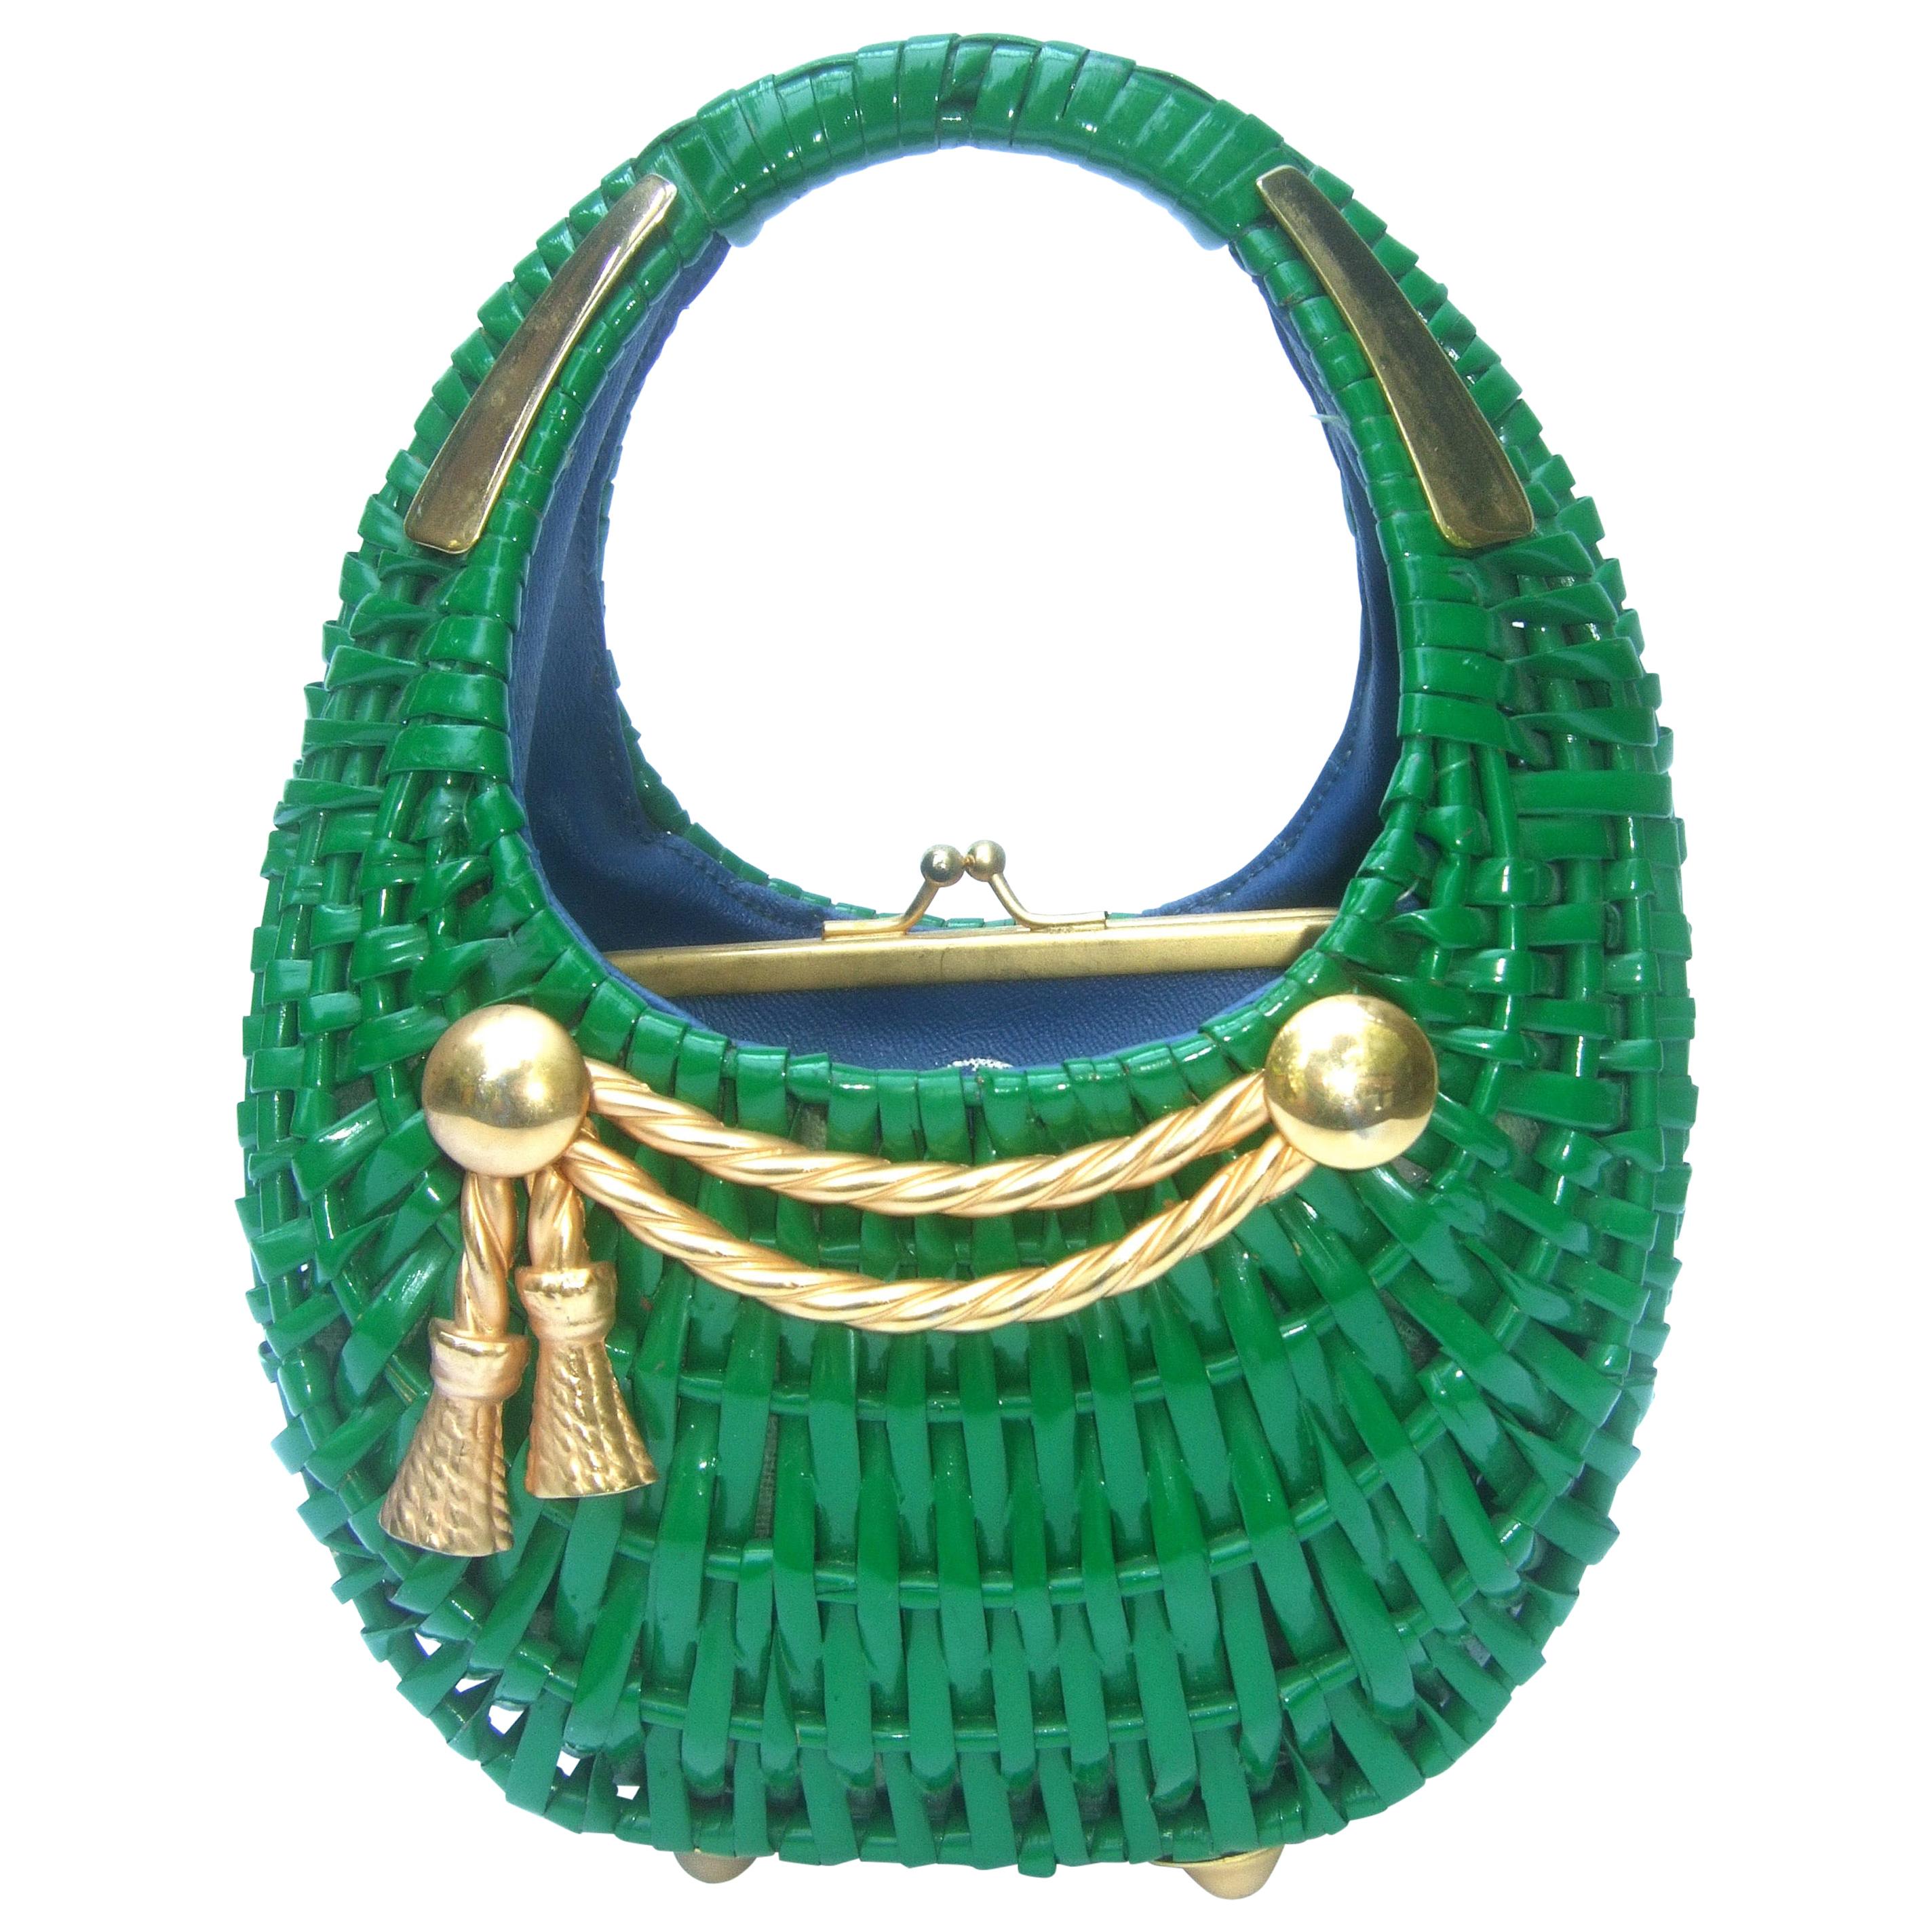 1970s Italian Kelly Green Wicker Diminutive Basket Shaped Handbag 